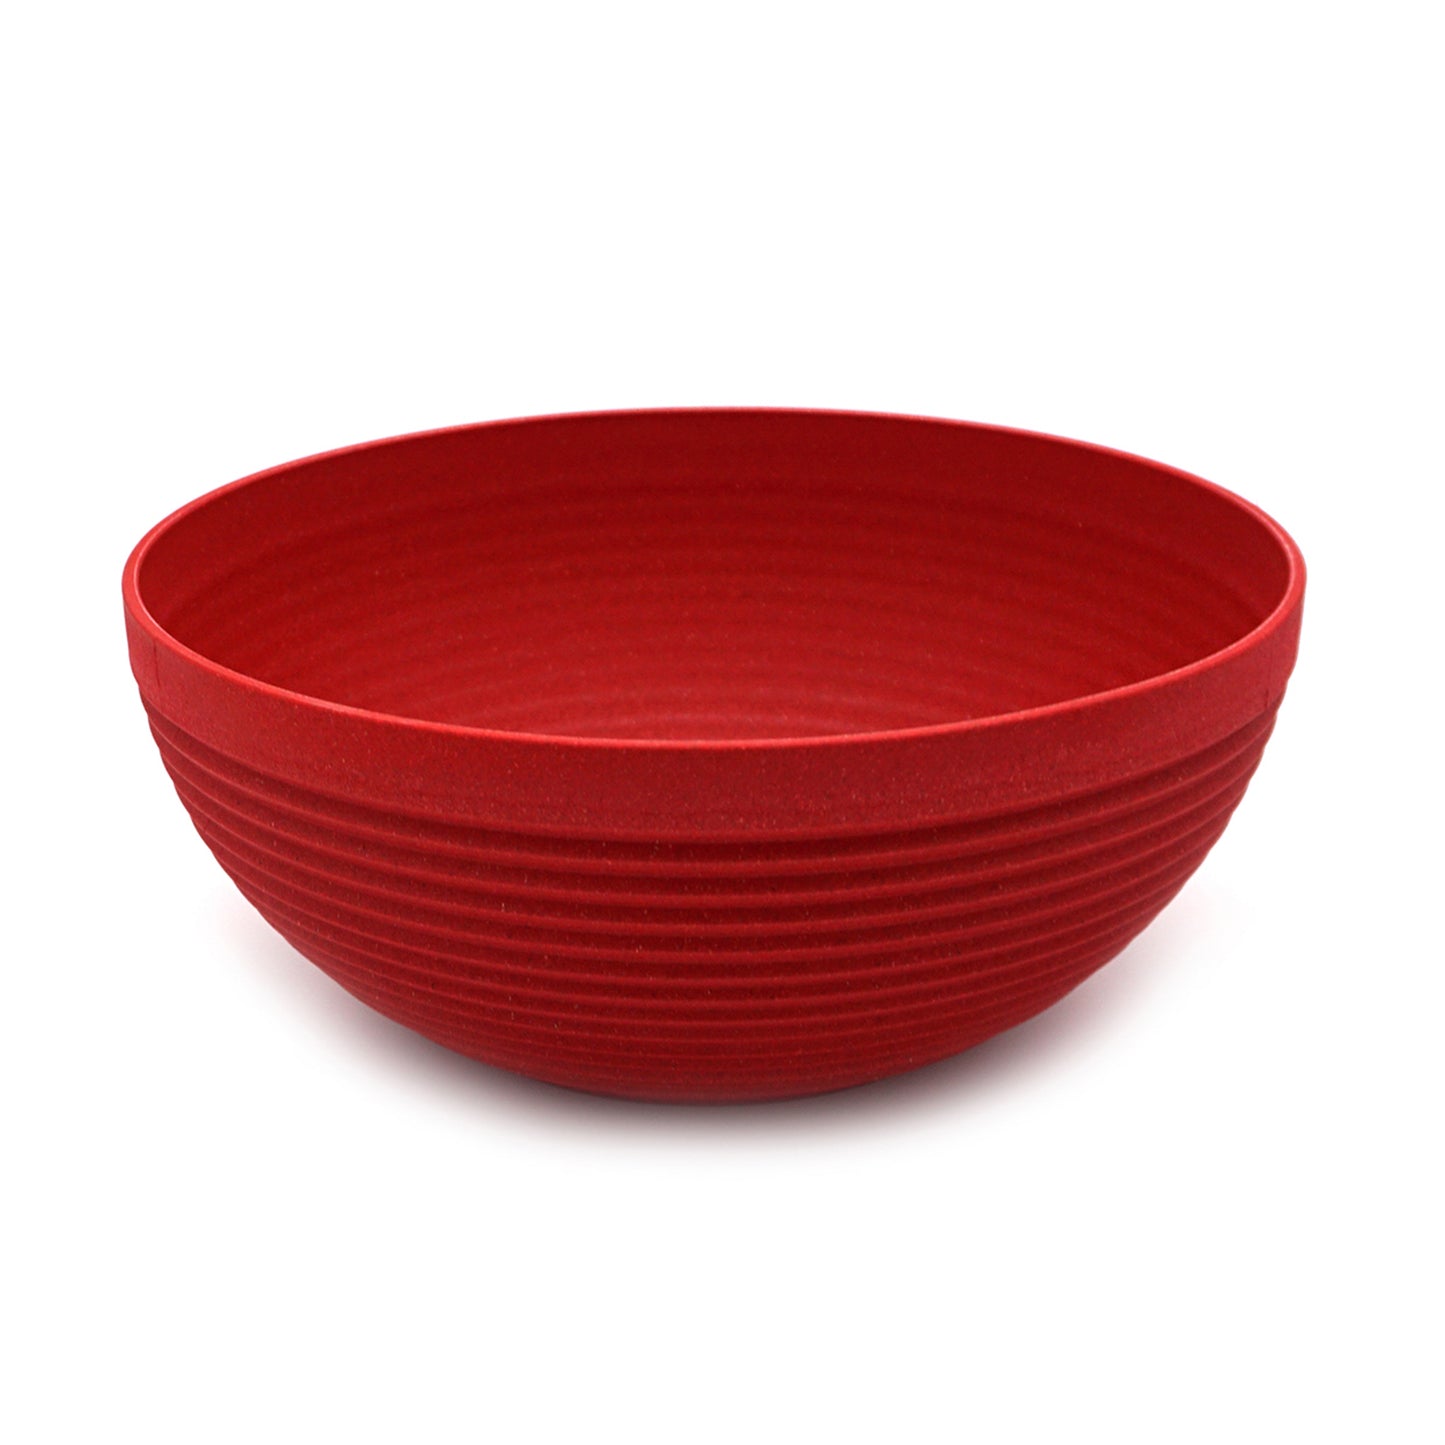 Paprika Red Serving Bowl